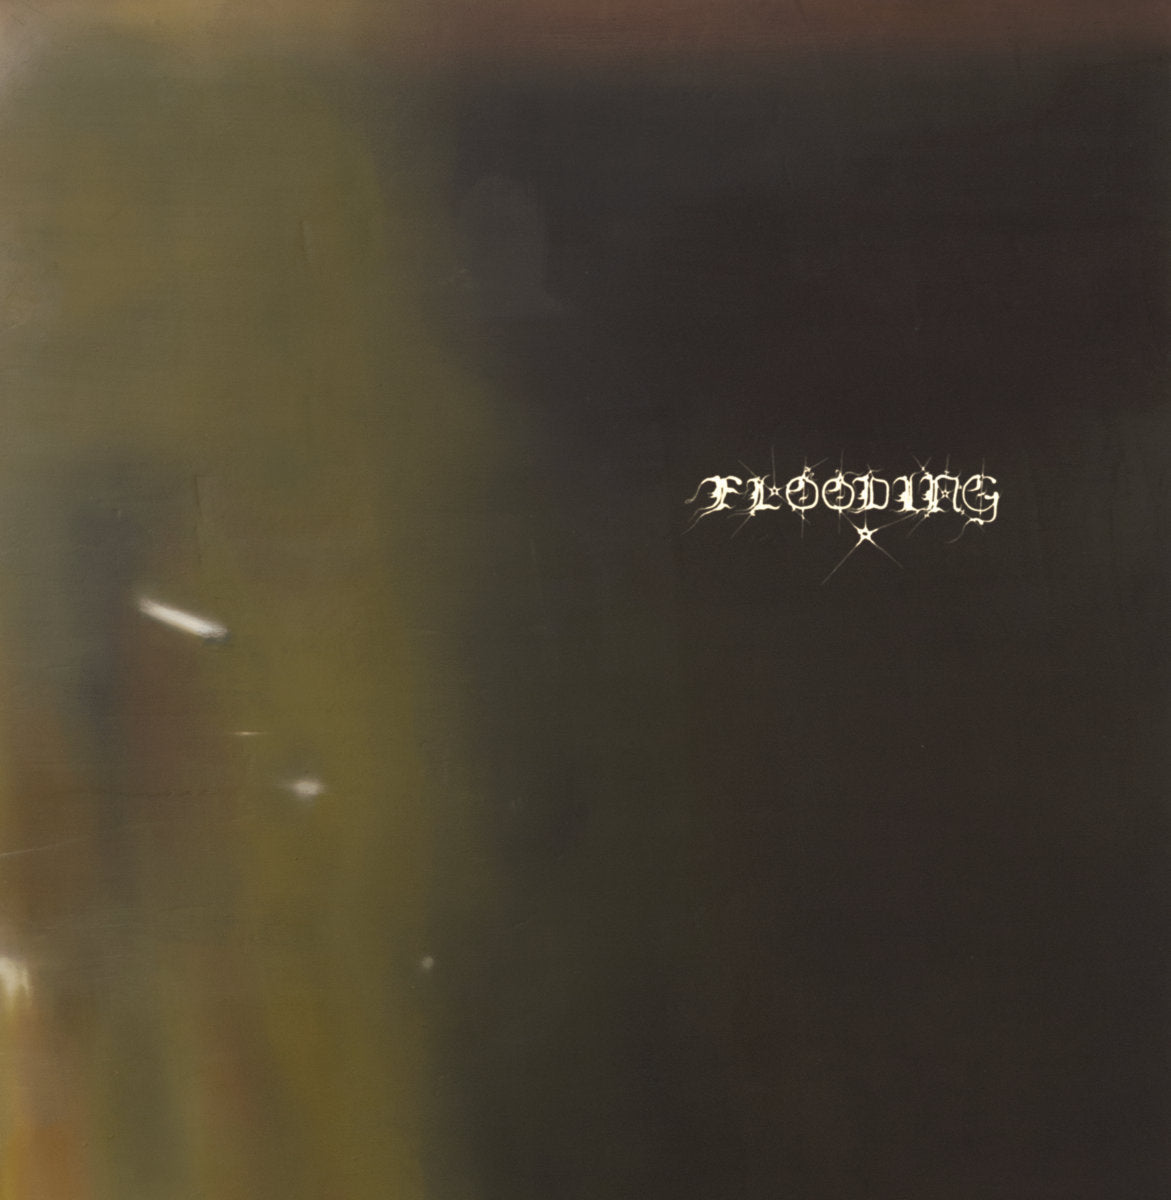 Flooding "Silhouette Machine" LP